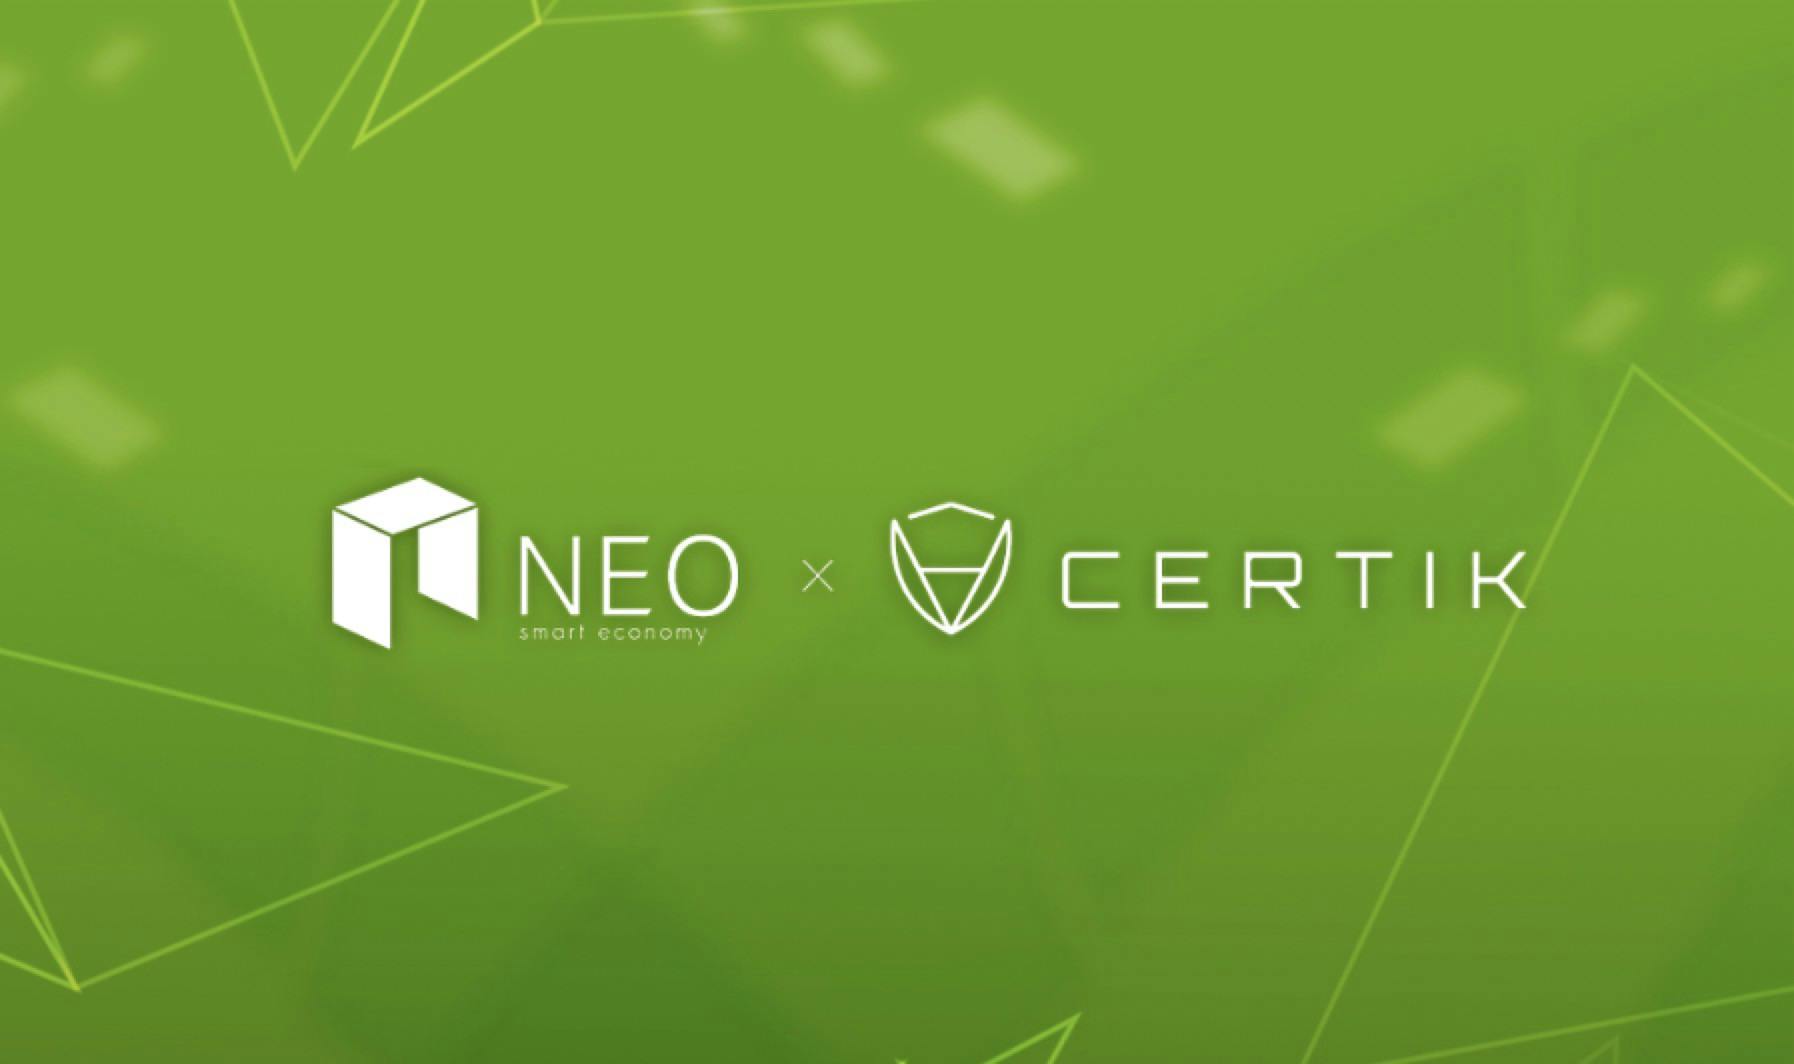 CertiK Partners With NEO for Next Secure Smart Economic Model